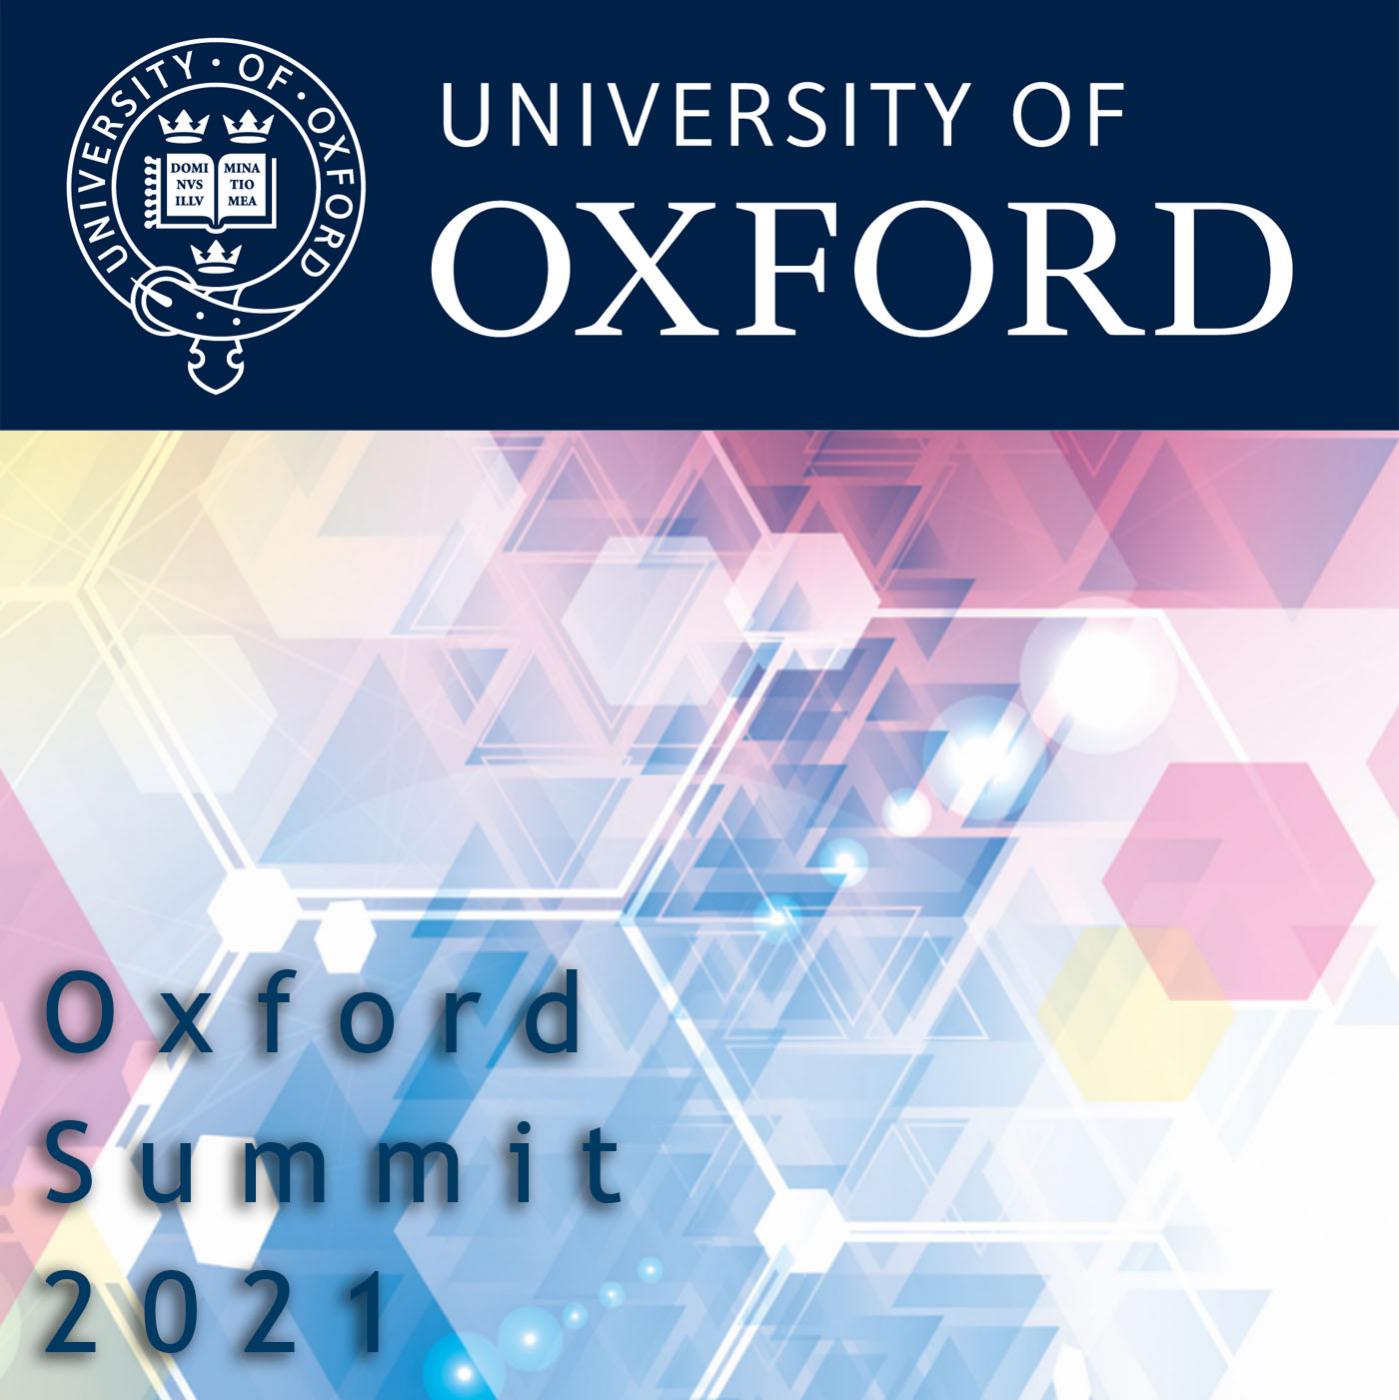 Oxford Summit 2021